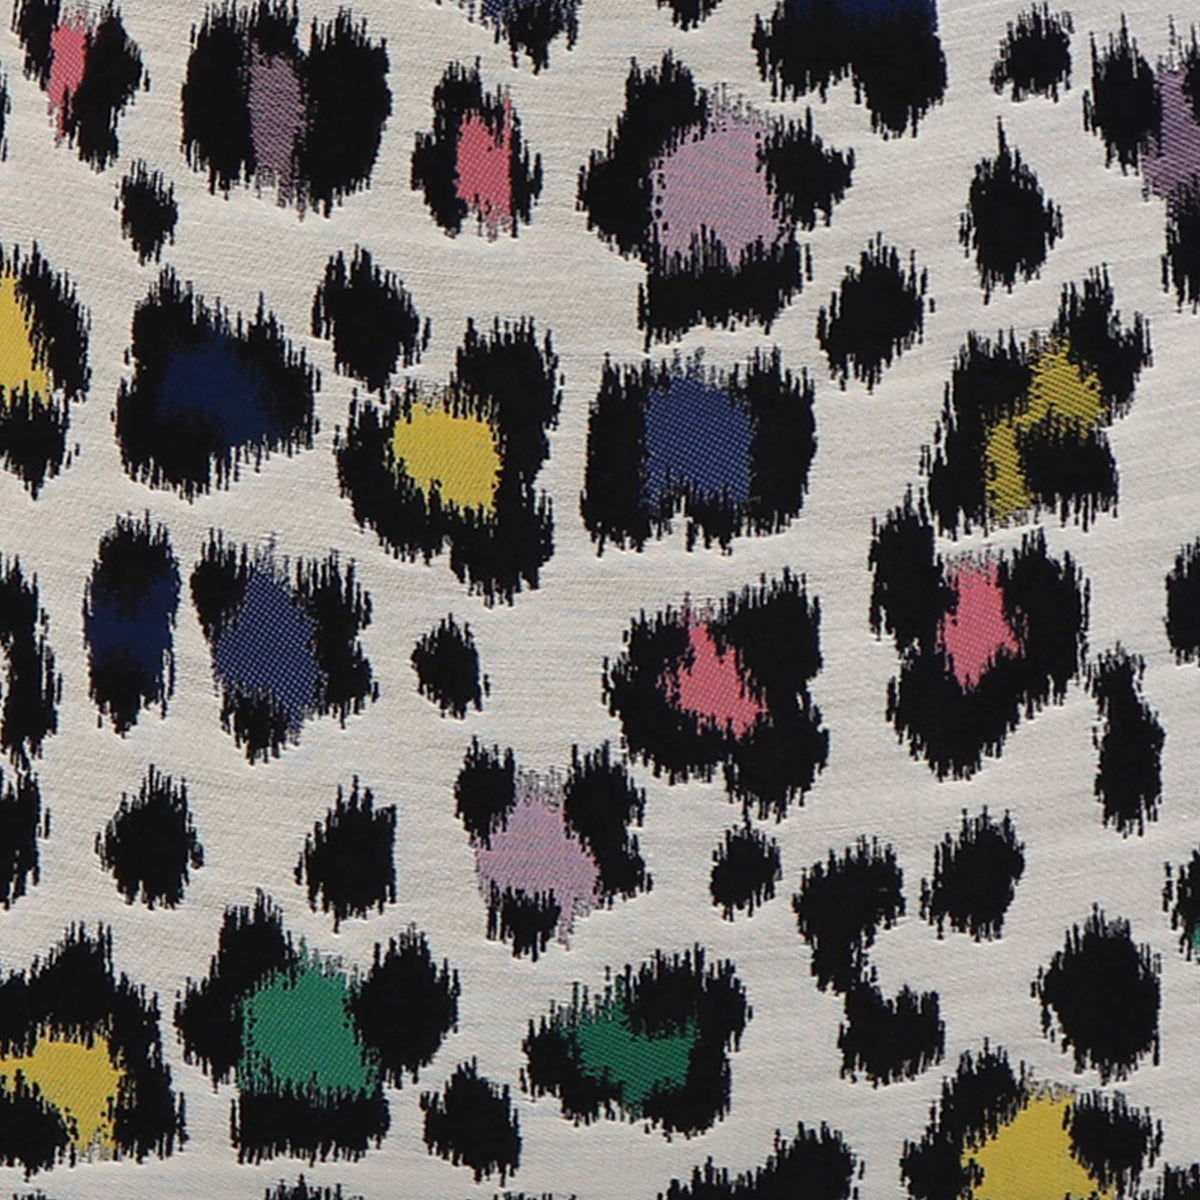 Rosette Woven Disco / 4x4 inch Fabric Swatch